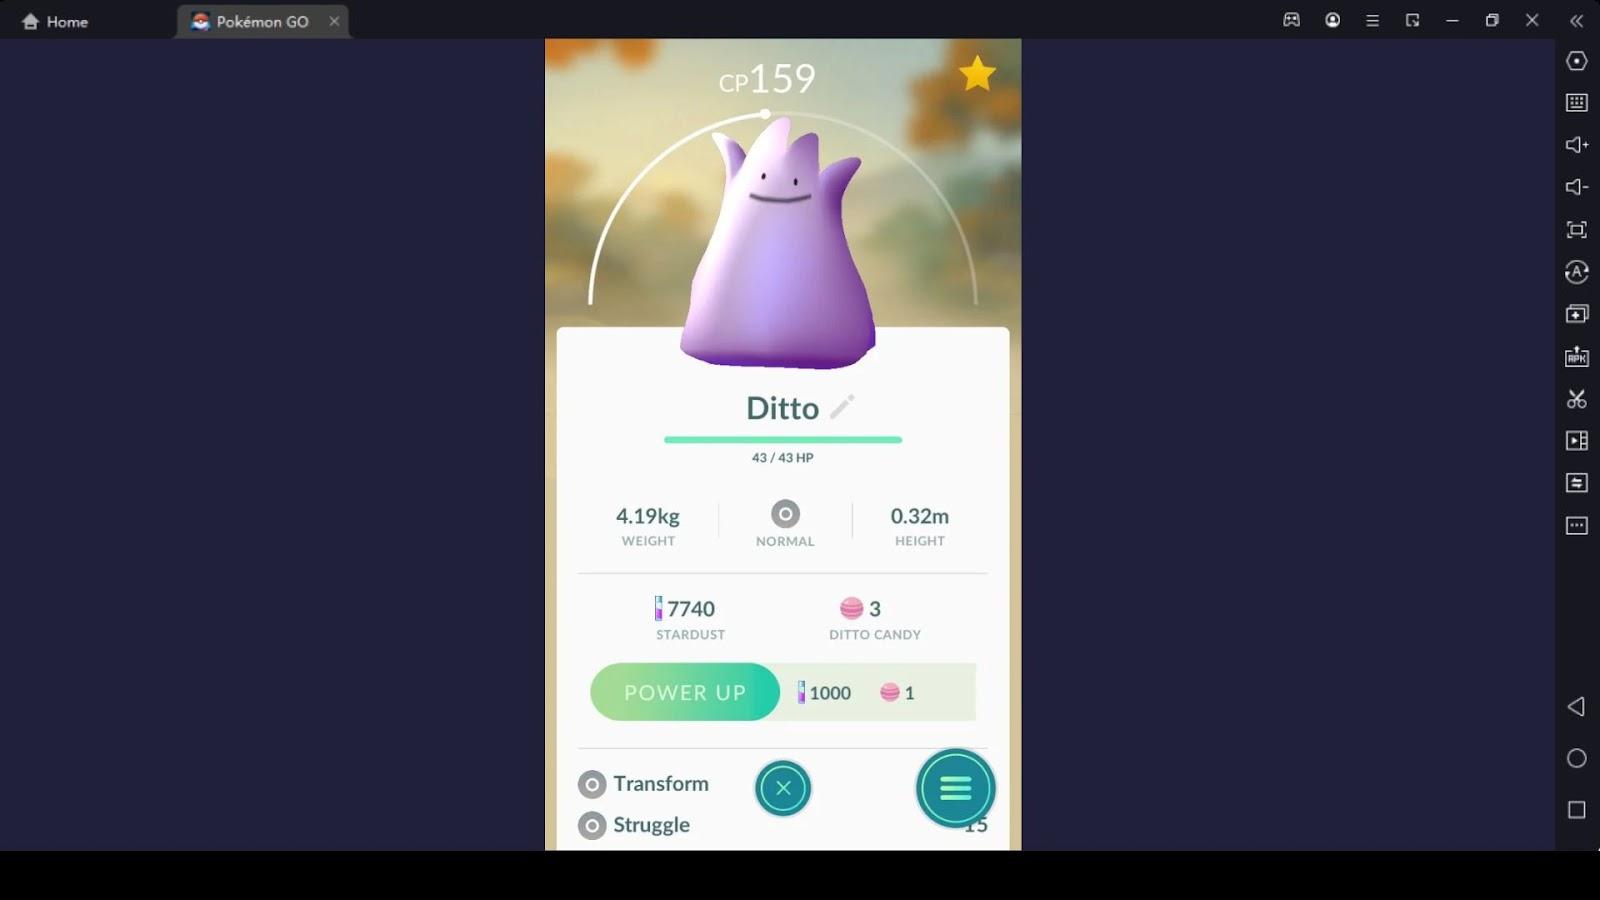 How to catch Ditto in Pokémon Go - GadgetMatch